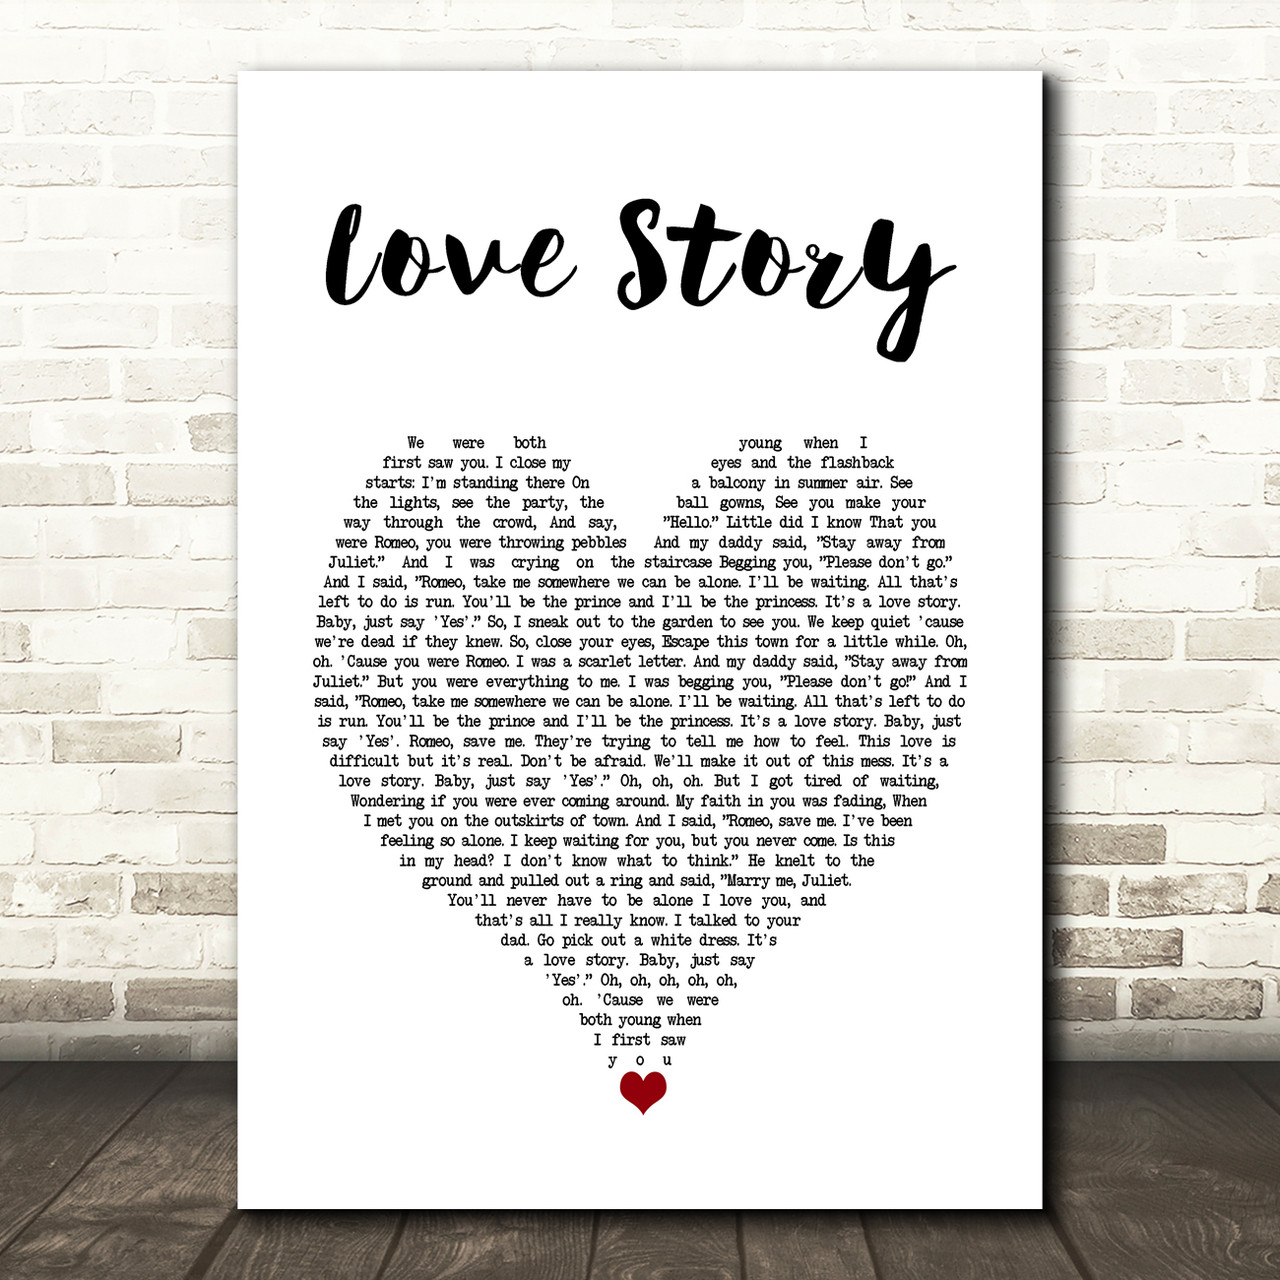 Love Story lyrics